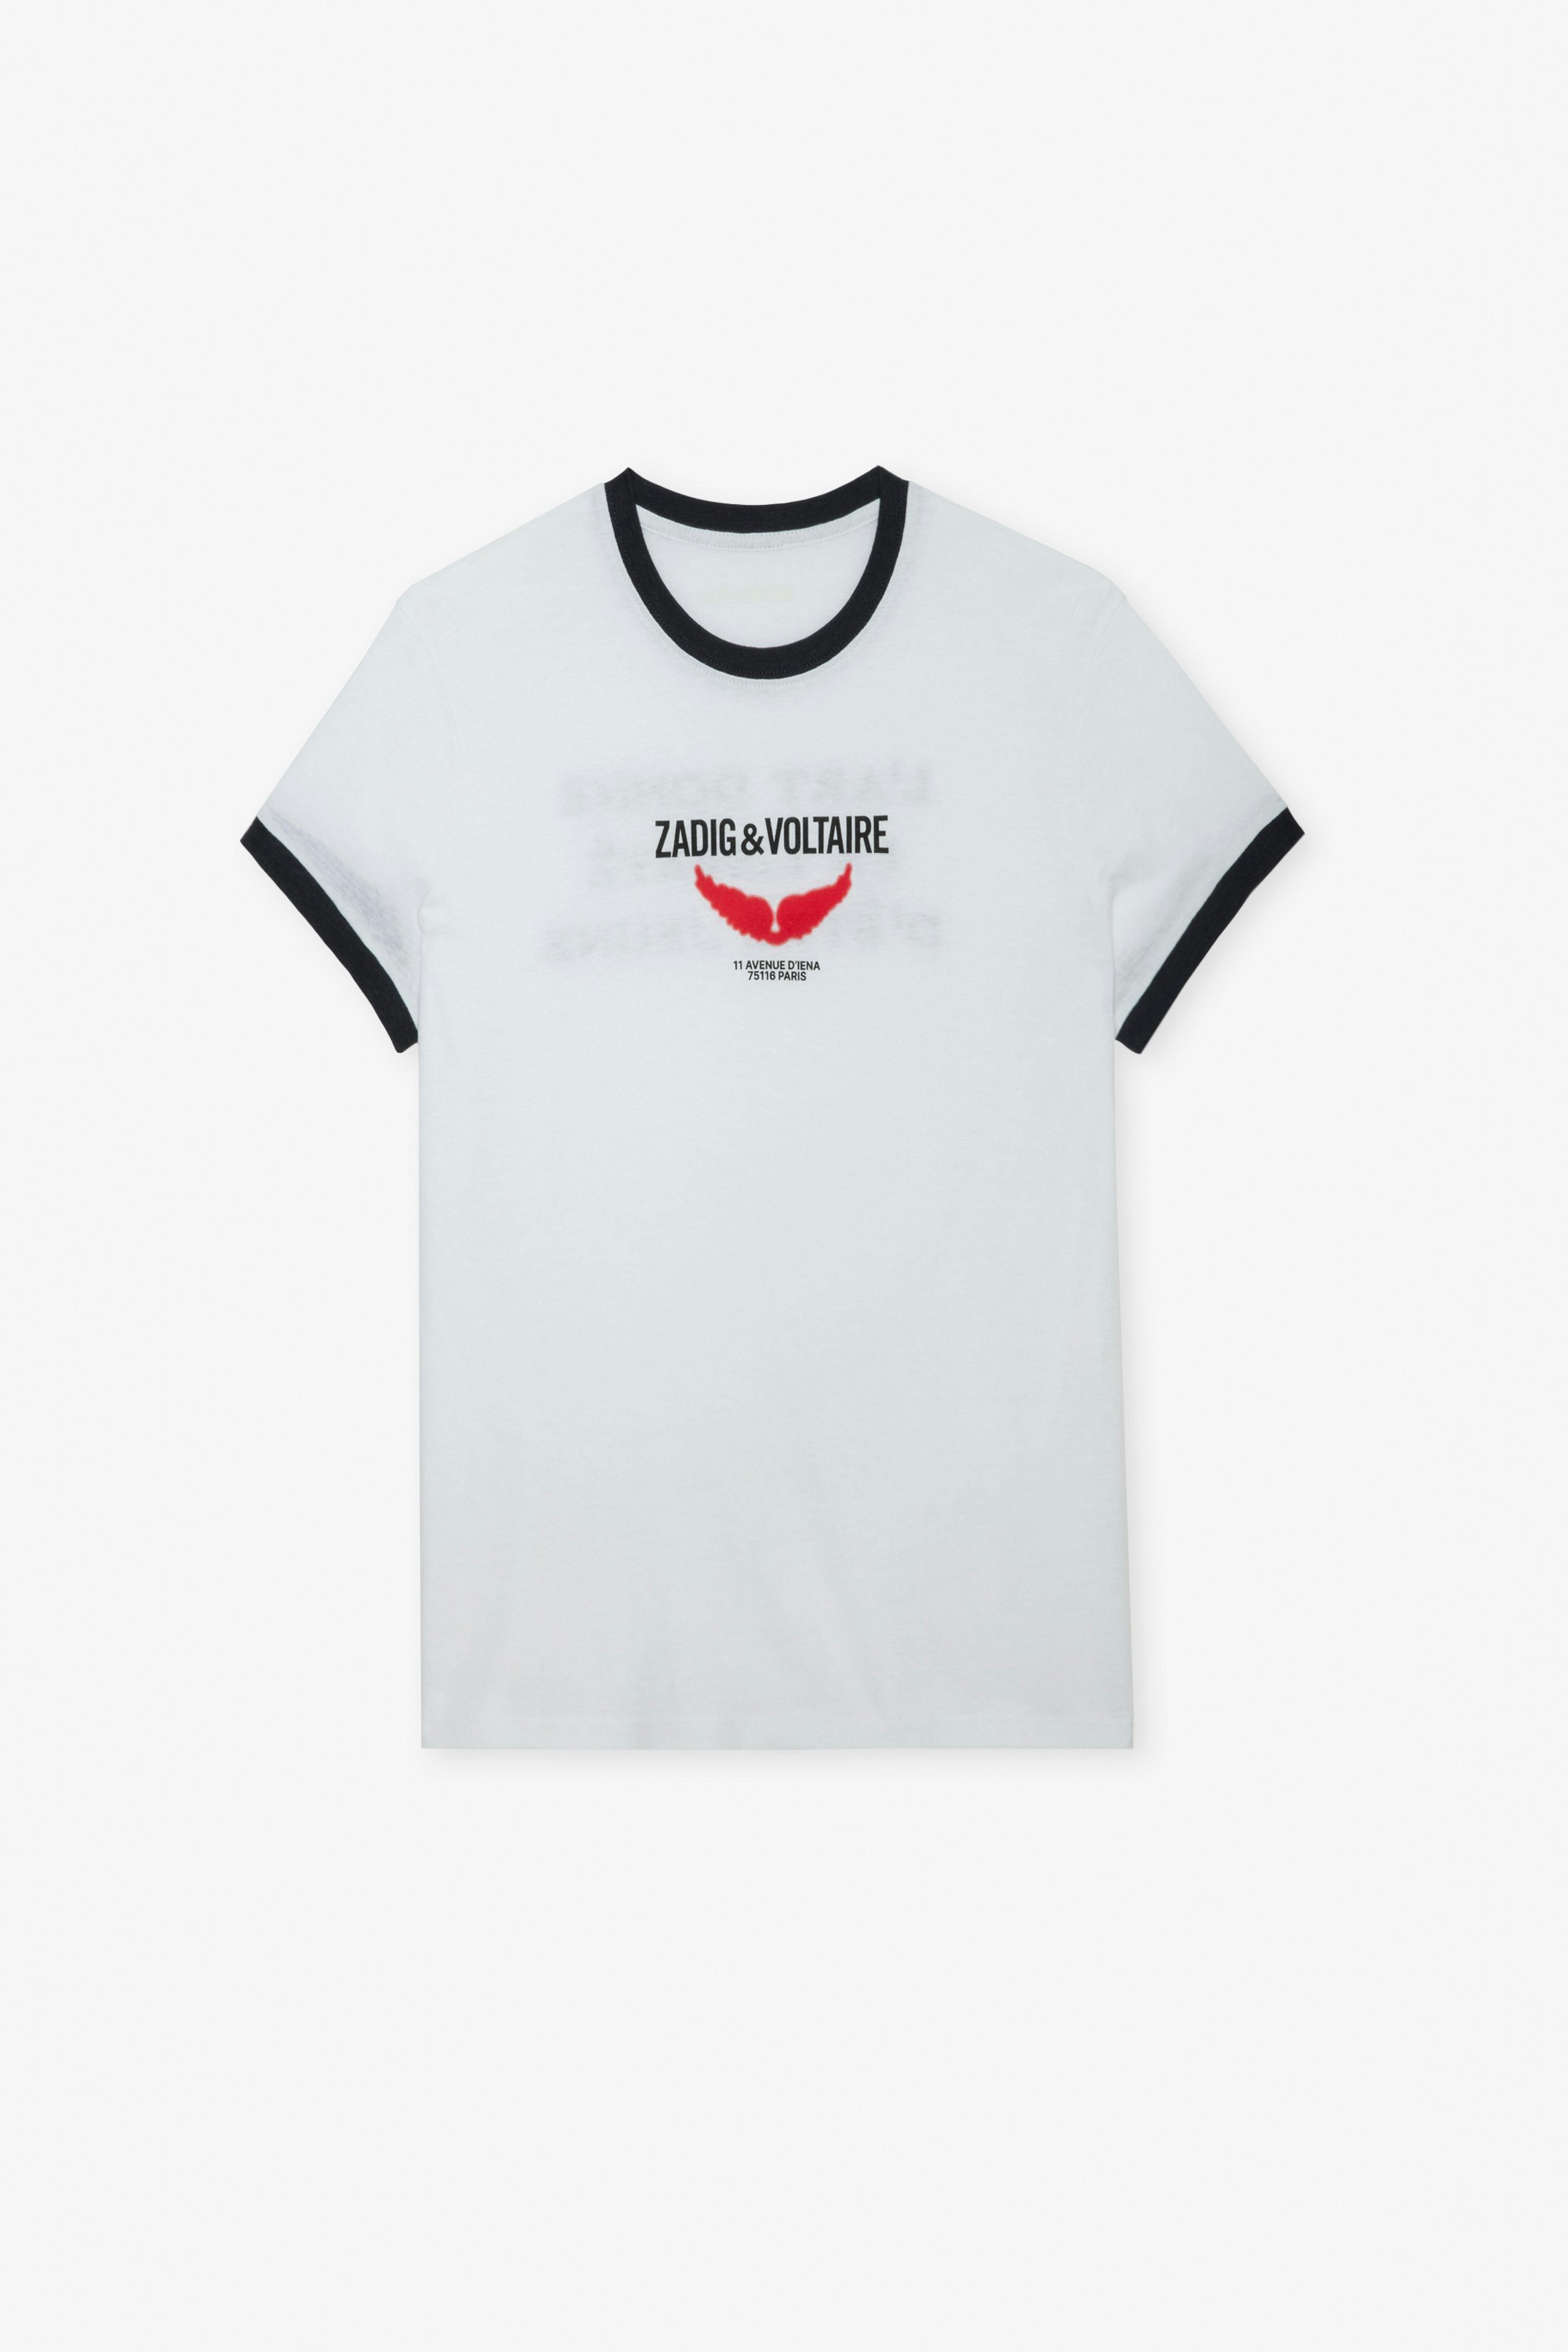 T-shirt Zoe Wings Liberté - T-shirt bianca da donna con bordi contrastanti, motivi ad ali e scritta "L'art donne la liberté d'être jeune".